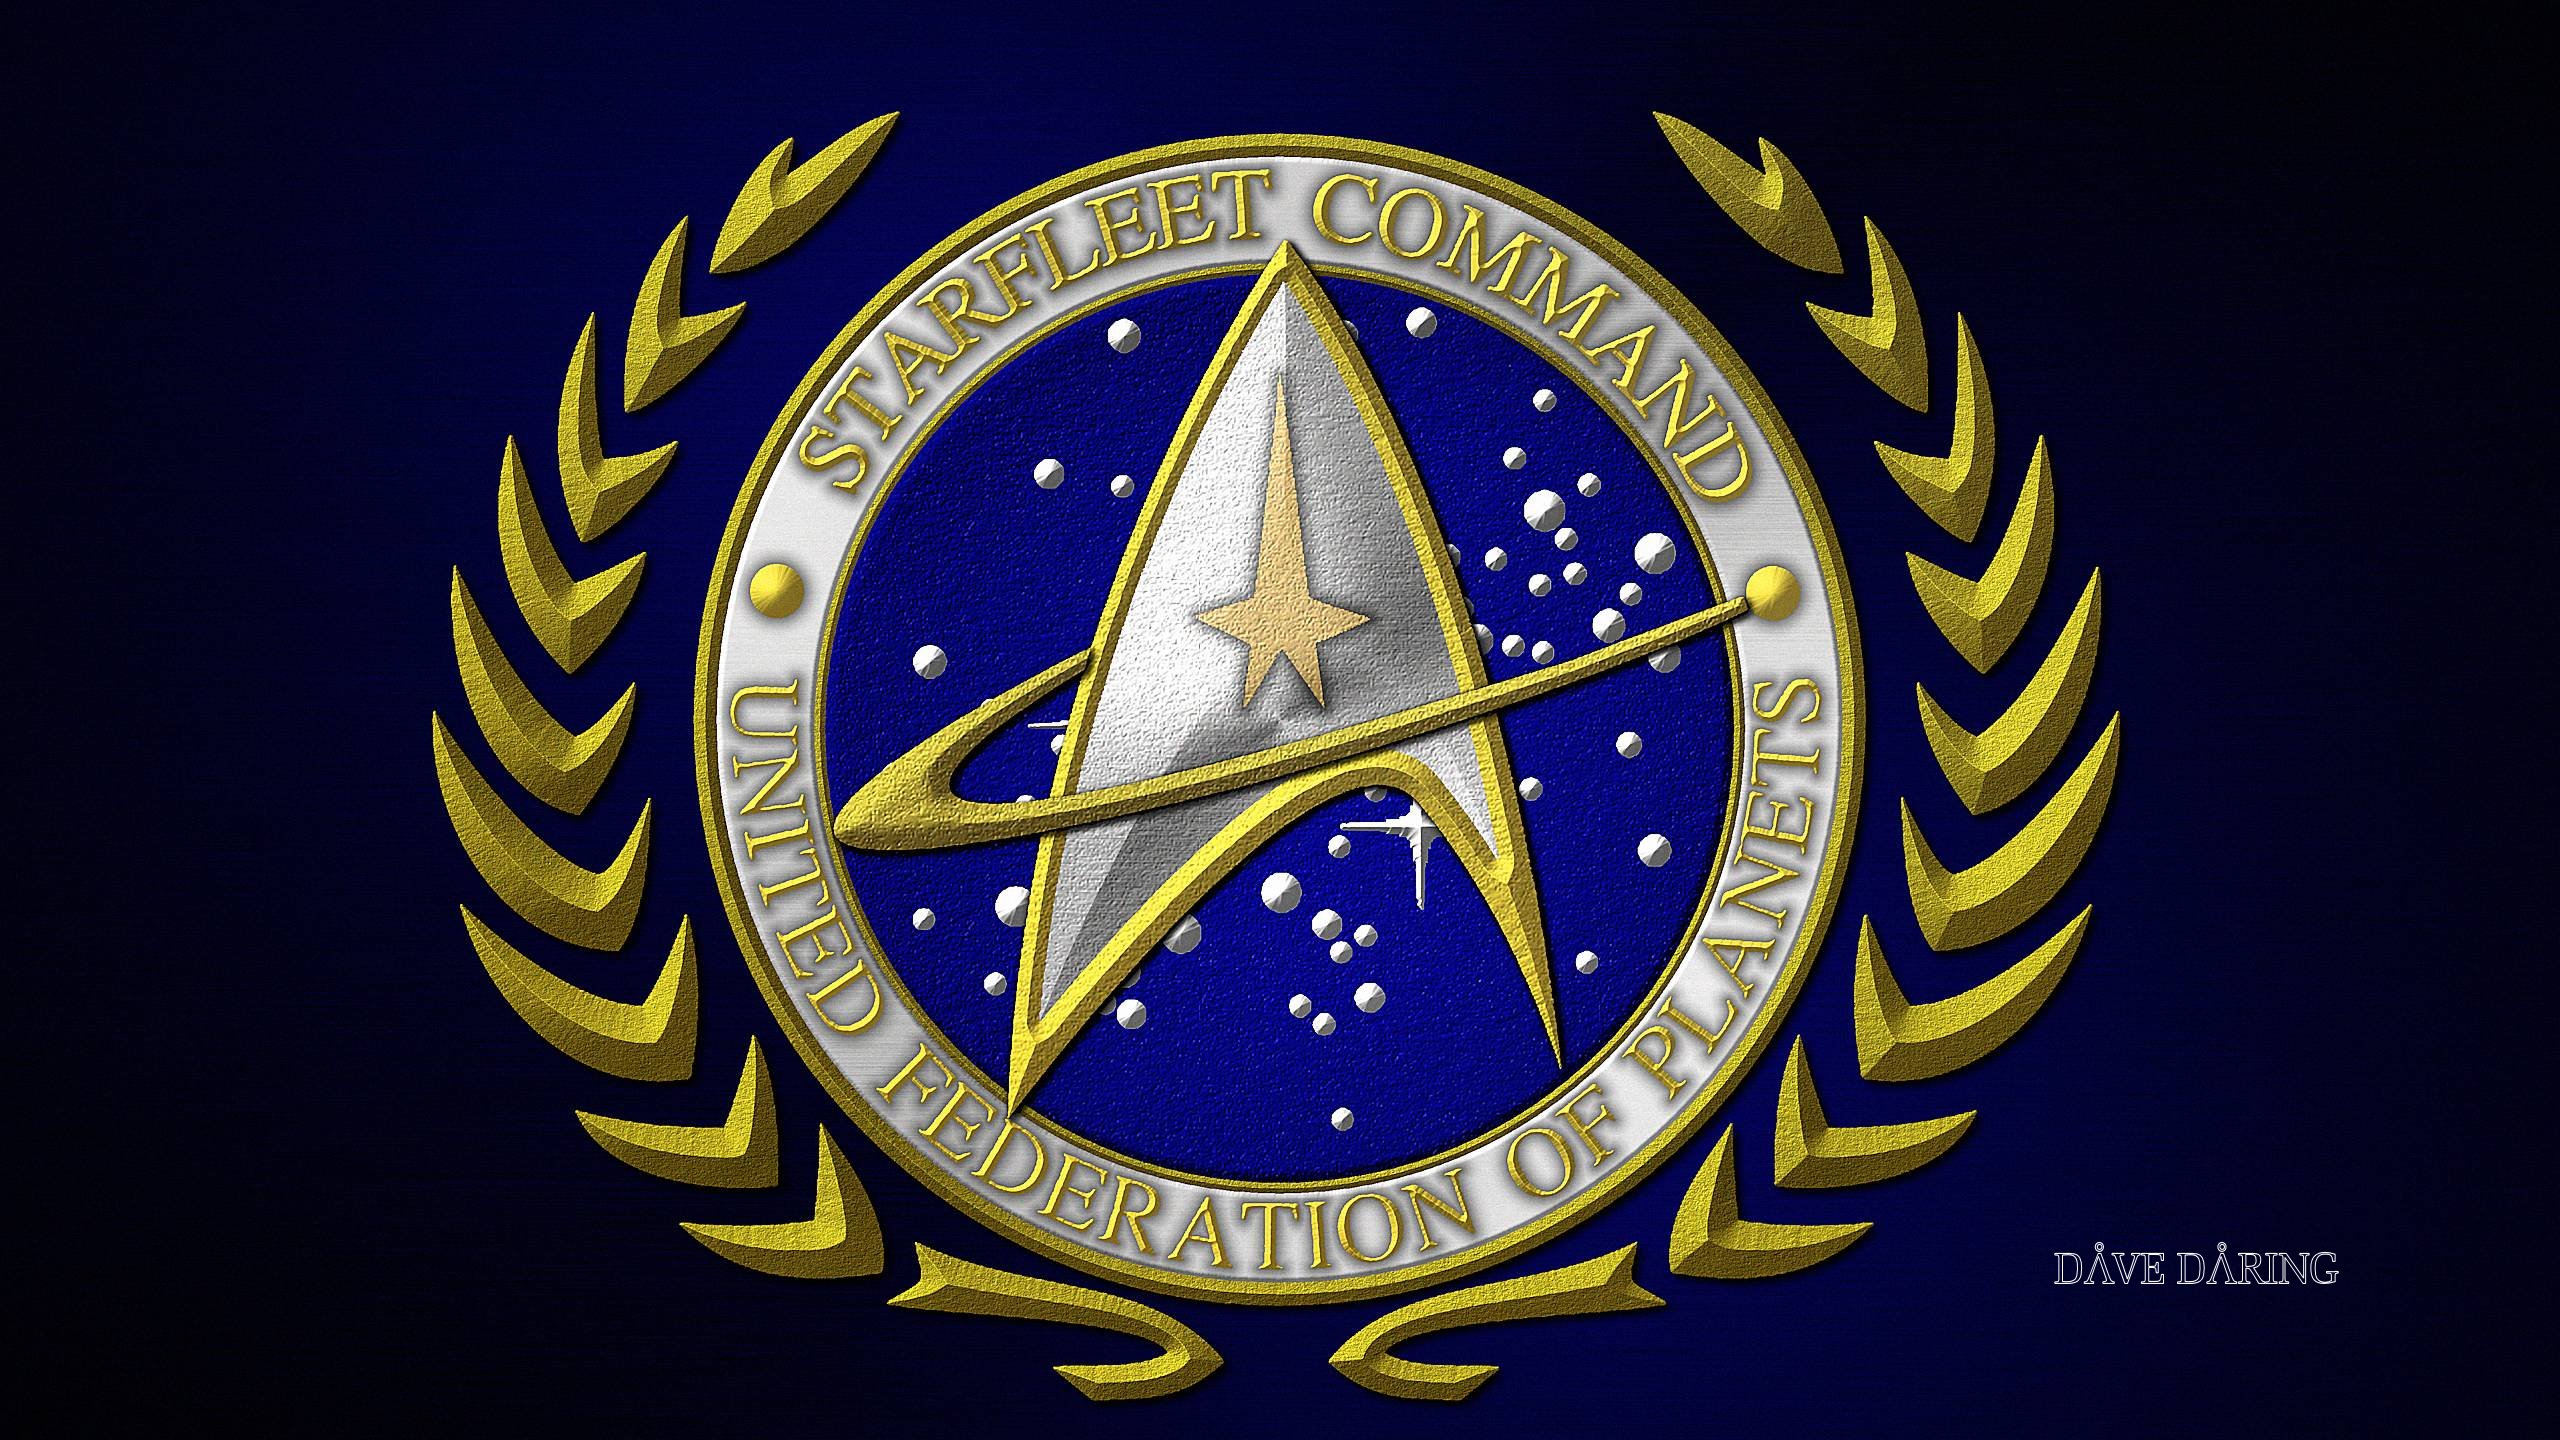 Star Trek Star Fleet Command Great Seal by Dave Daring on